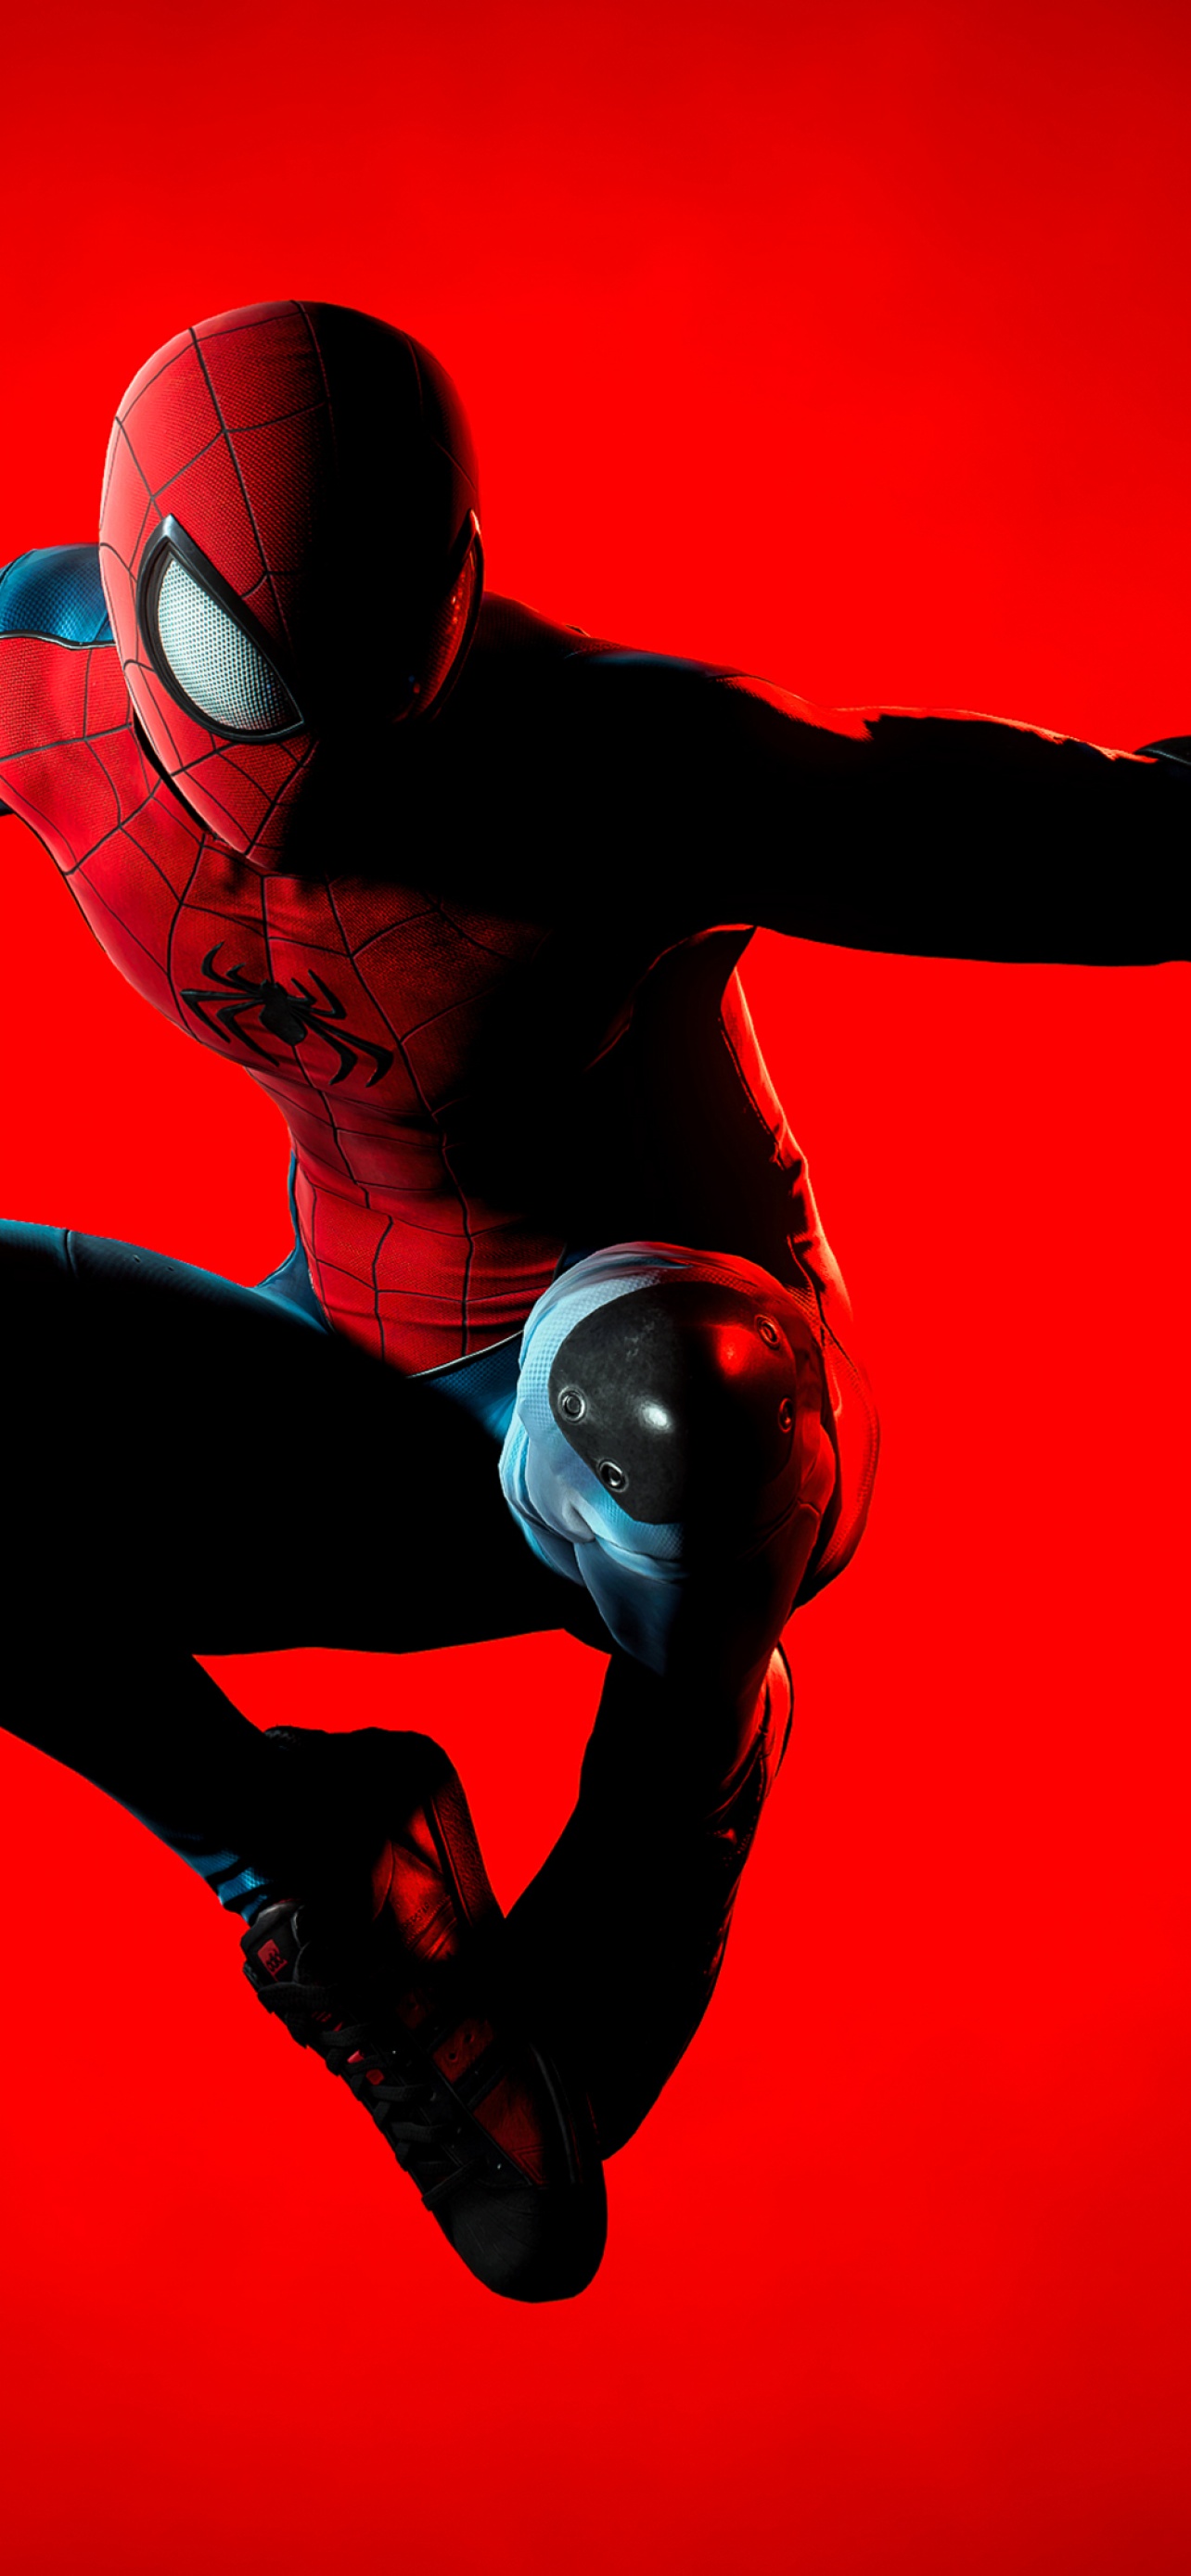 The Spiderman 4K IPhone Wallpaper HD  IPhone Wallpapers  iPhone Wallpapers